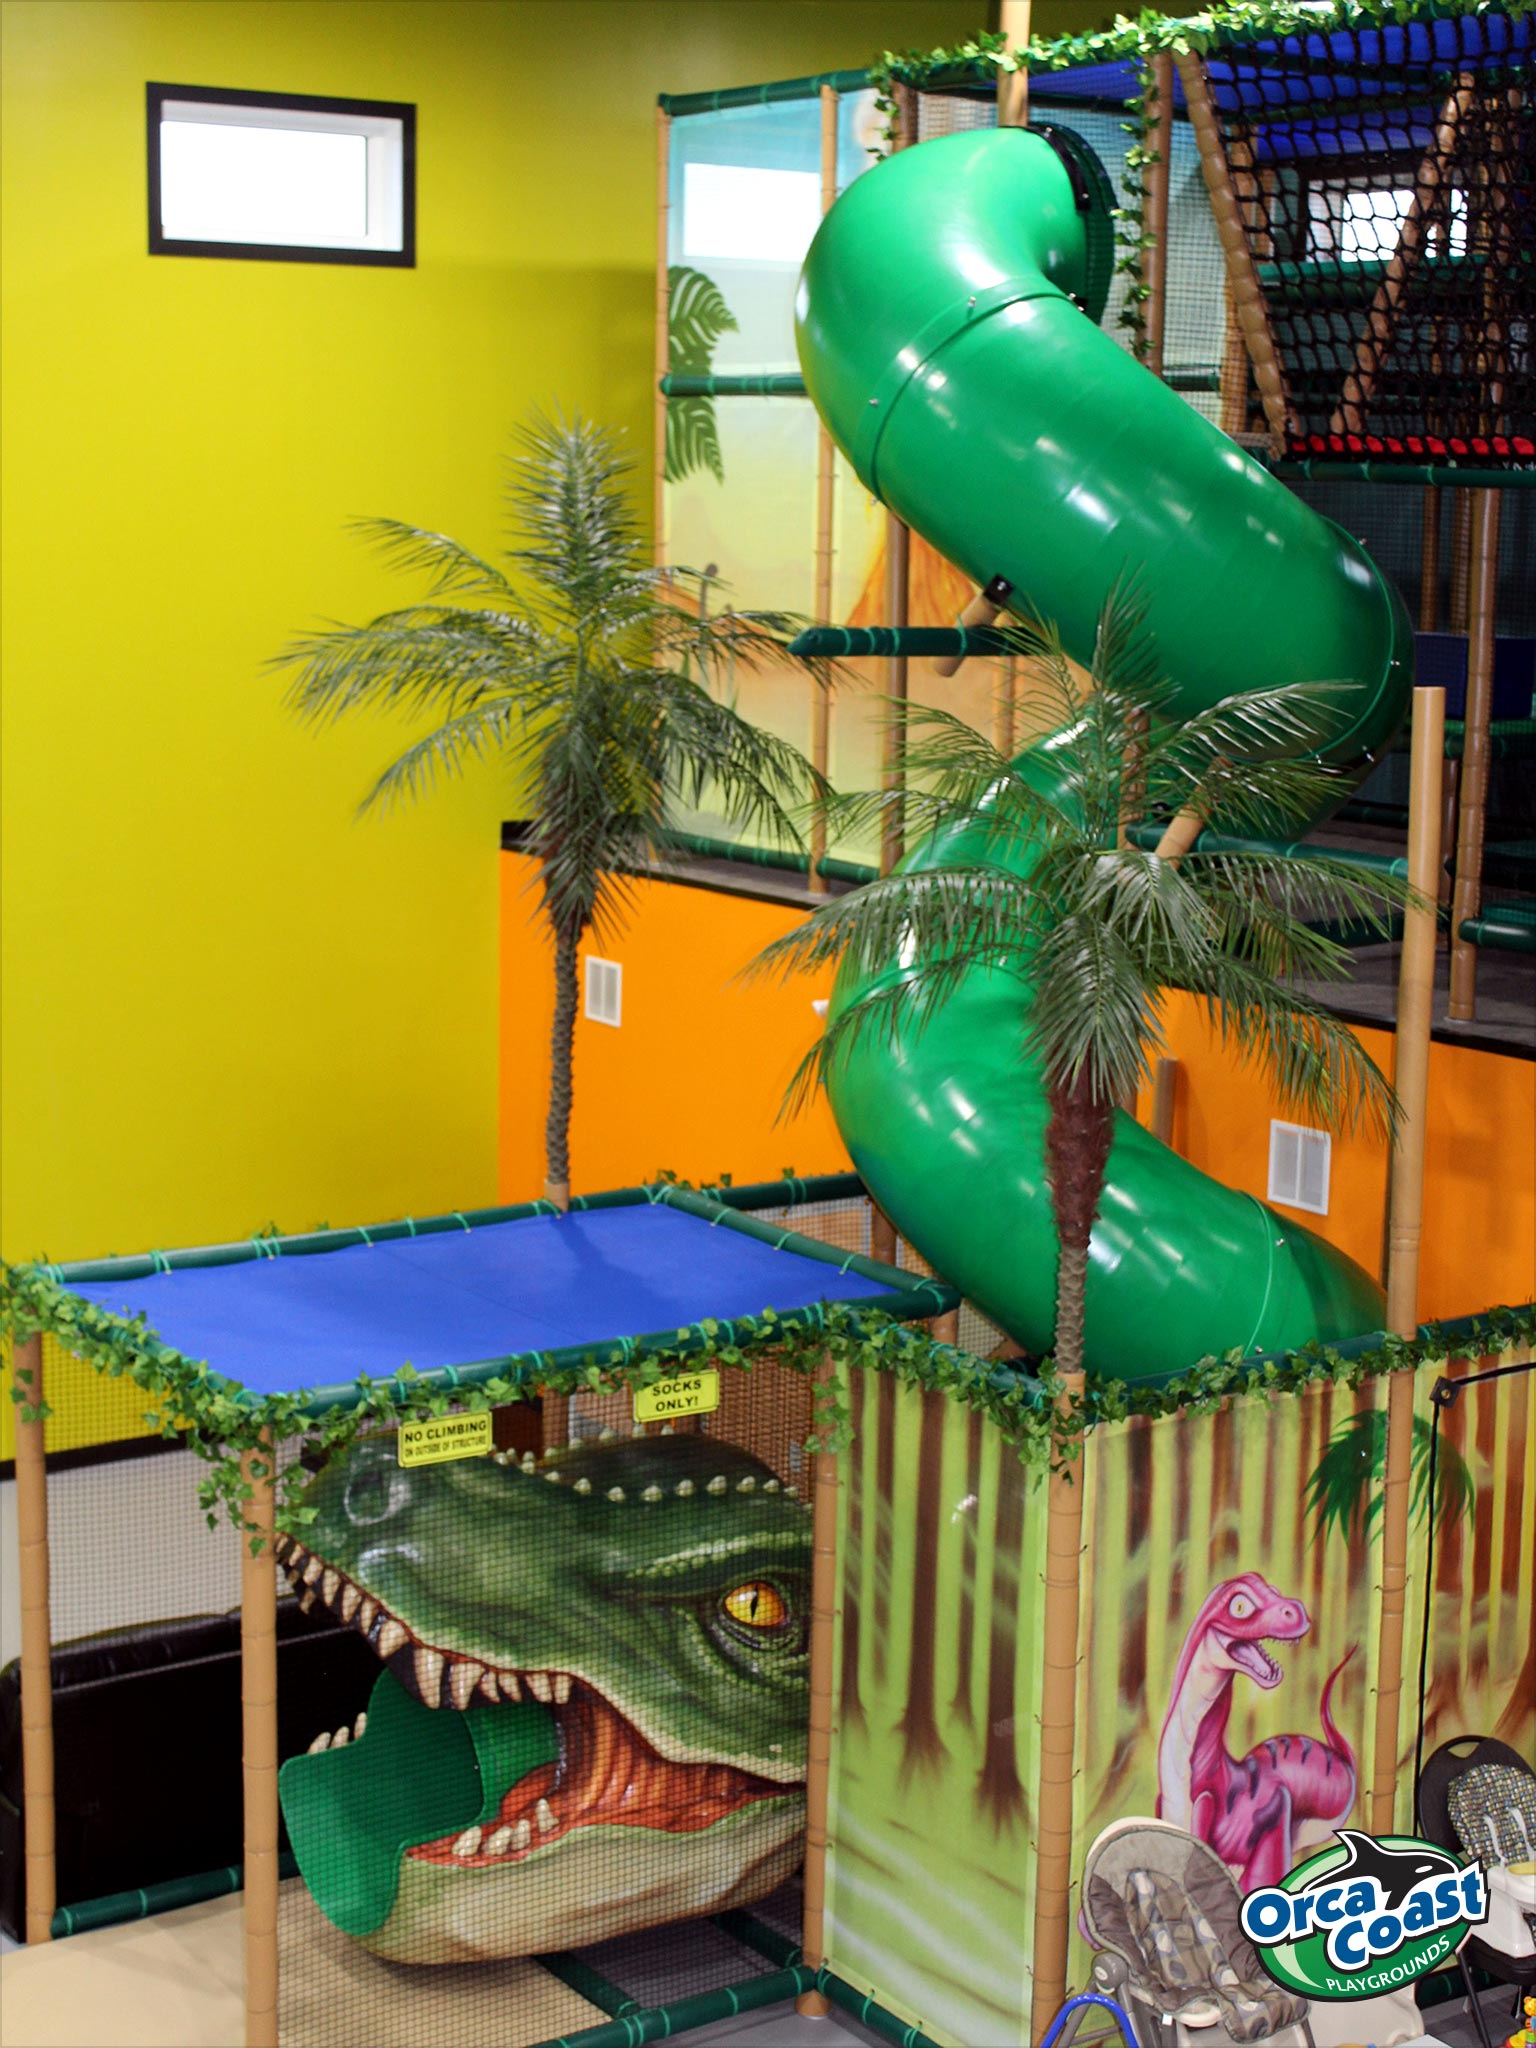 Sharptooth Adventures Children's Amusement Center in Morden